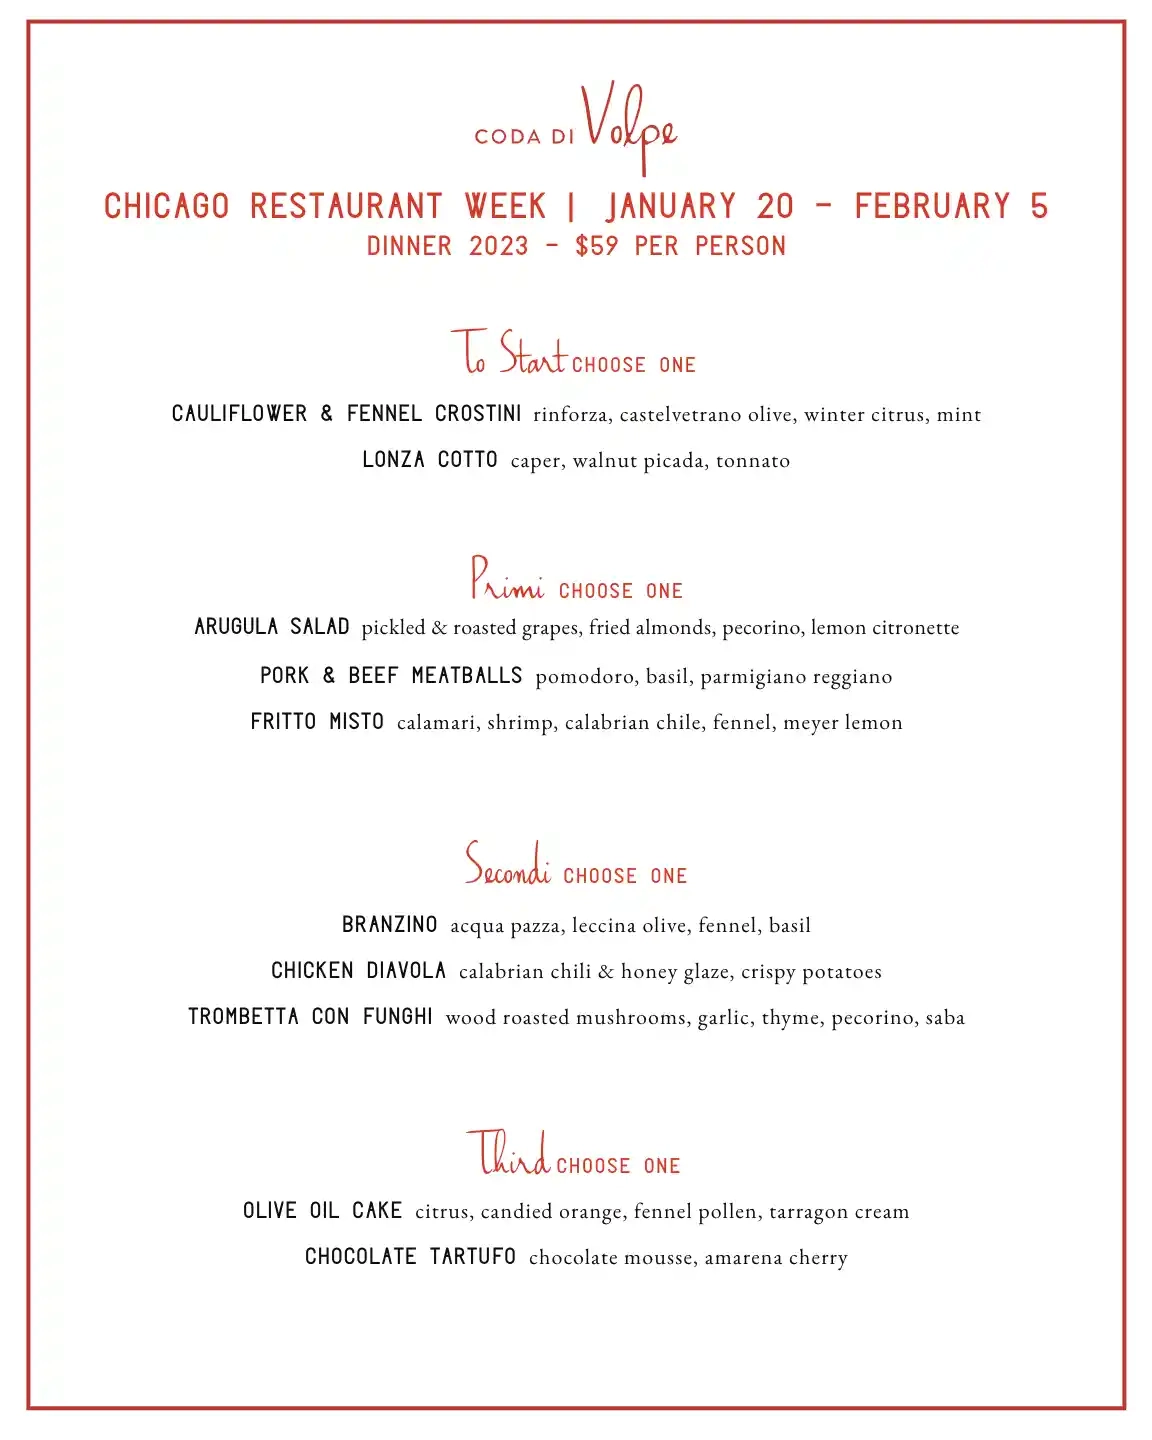 Chicago Restaurant Week 2023 Menu Coda Di Volpe Dinner